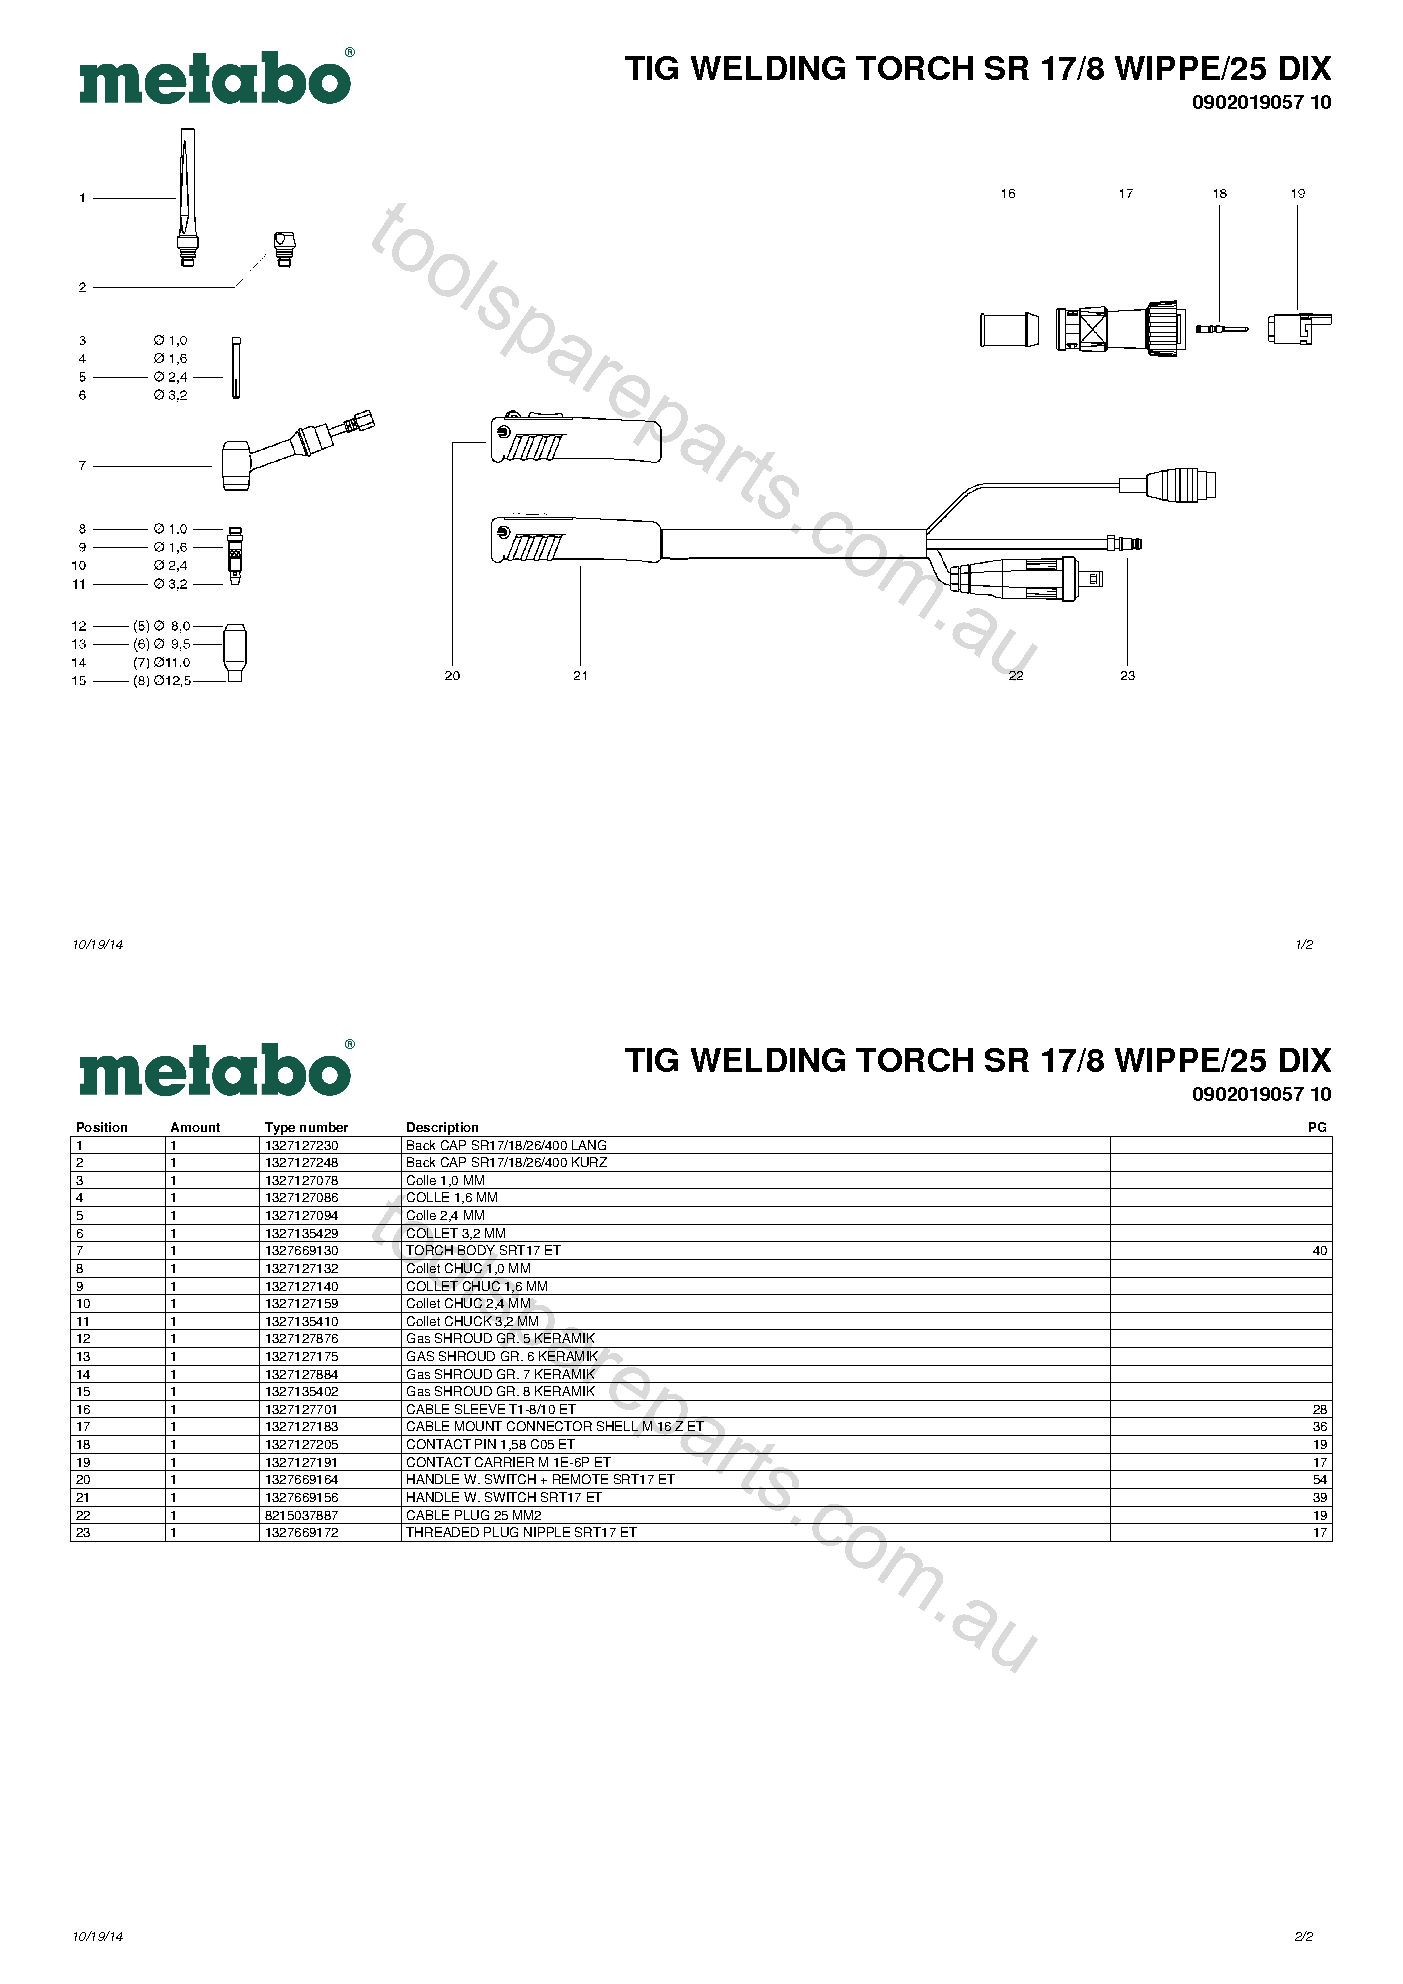 Metabo TIG WELDING TORCH SR 17/8 WIPPE/25 DIX 0902019057 10  Diagram 1